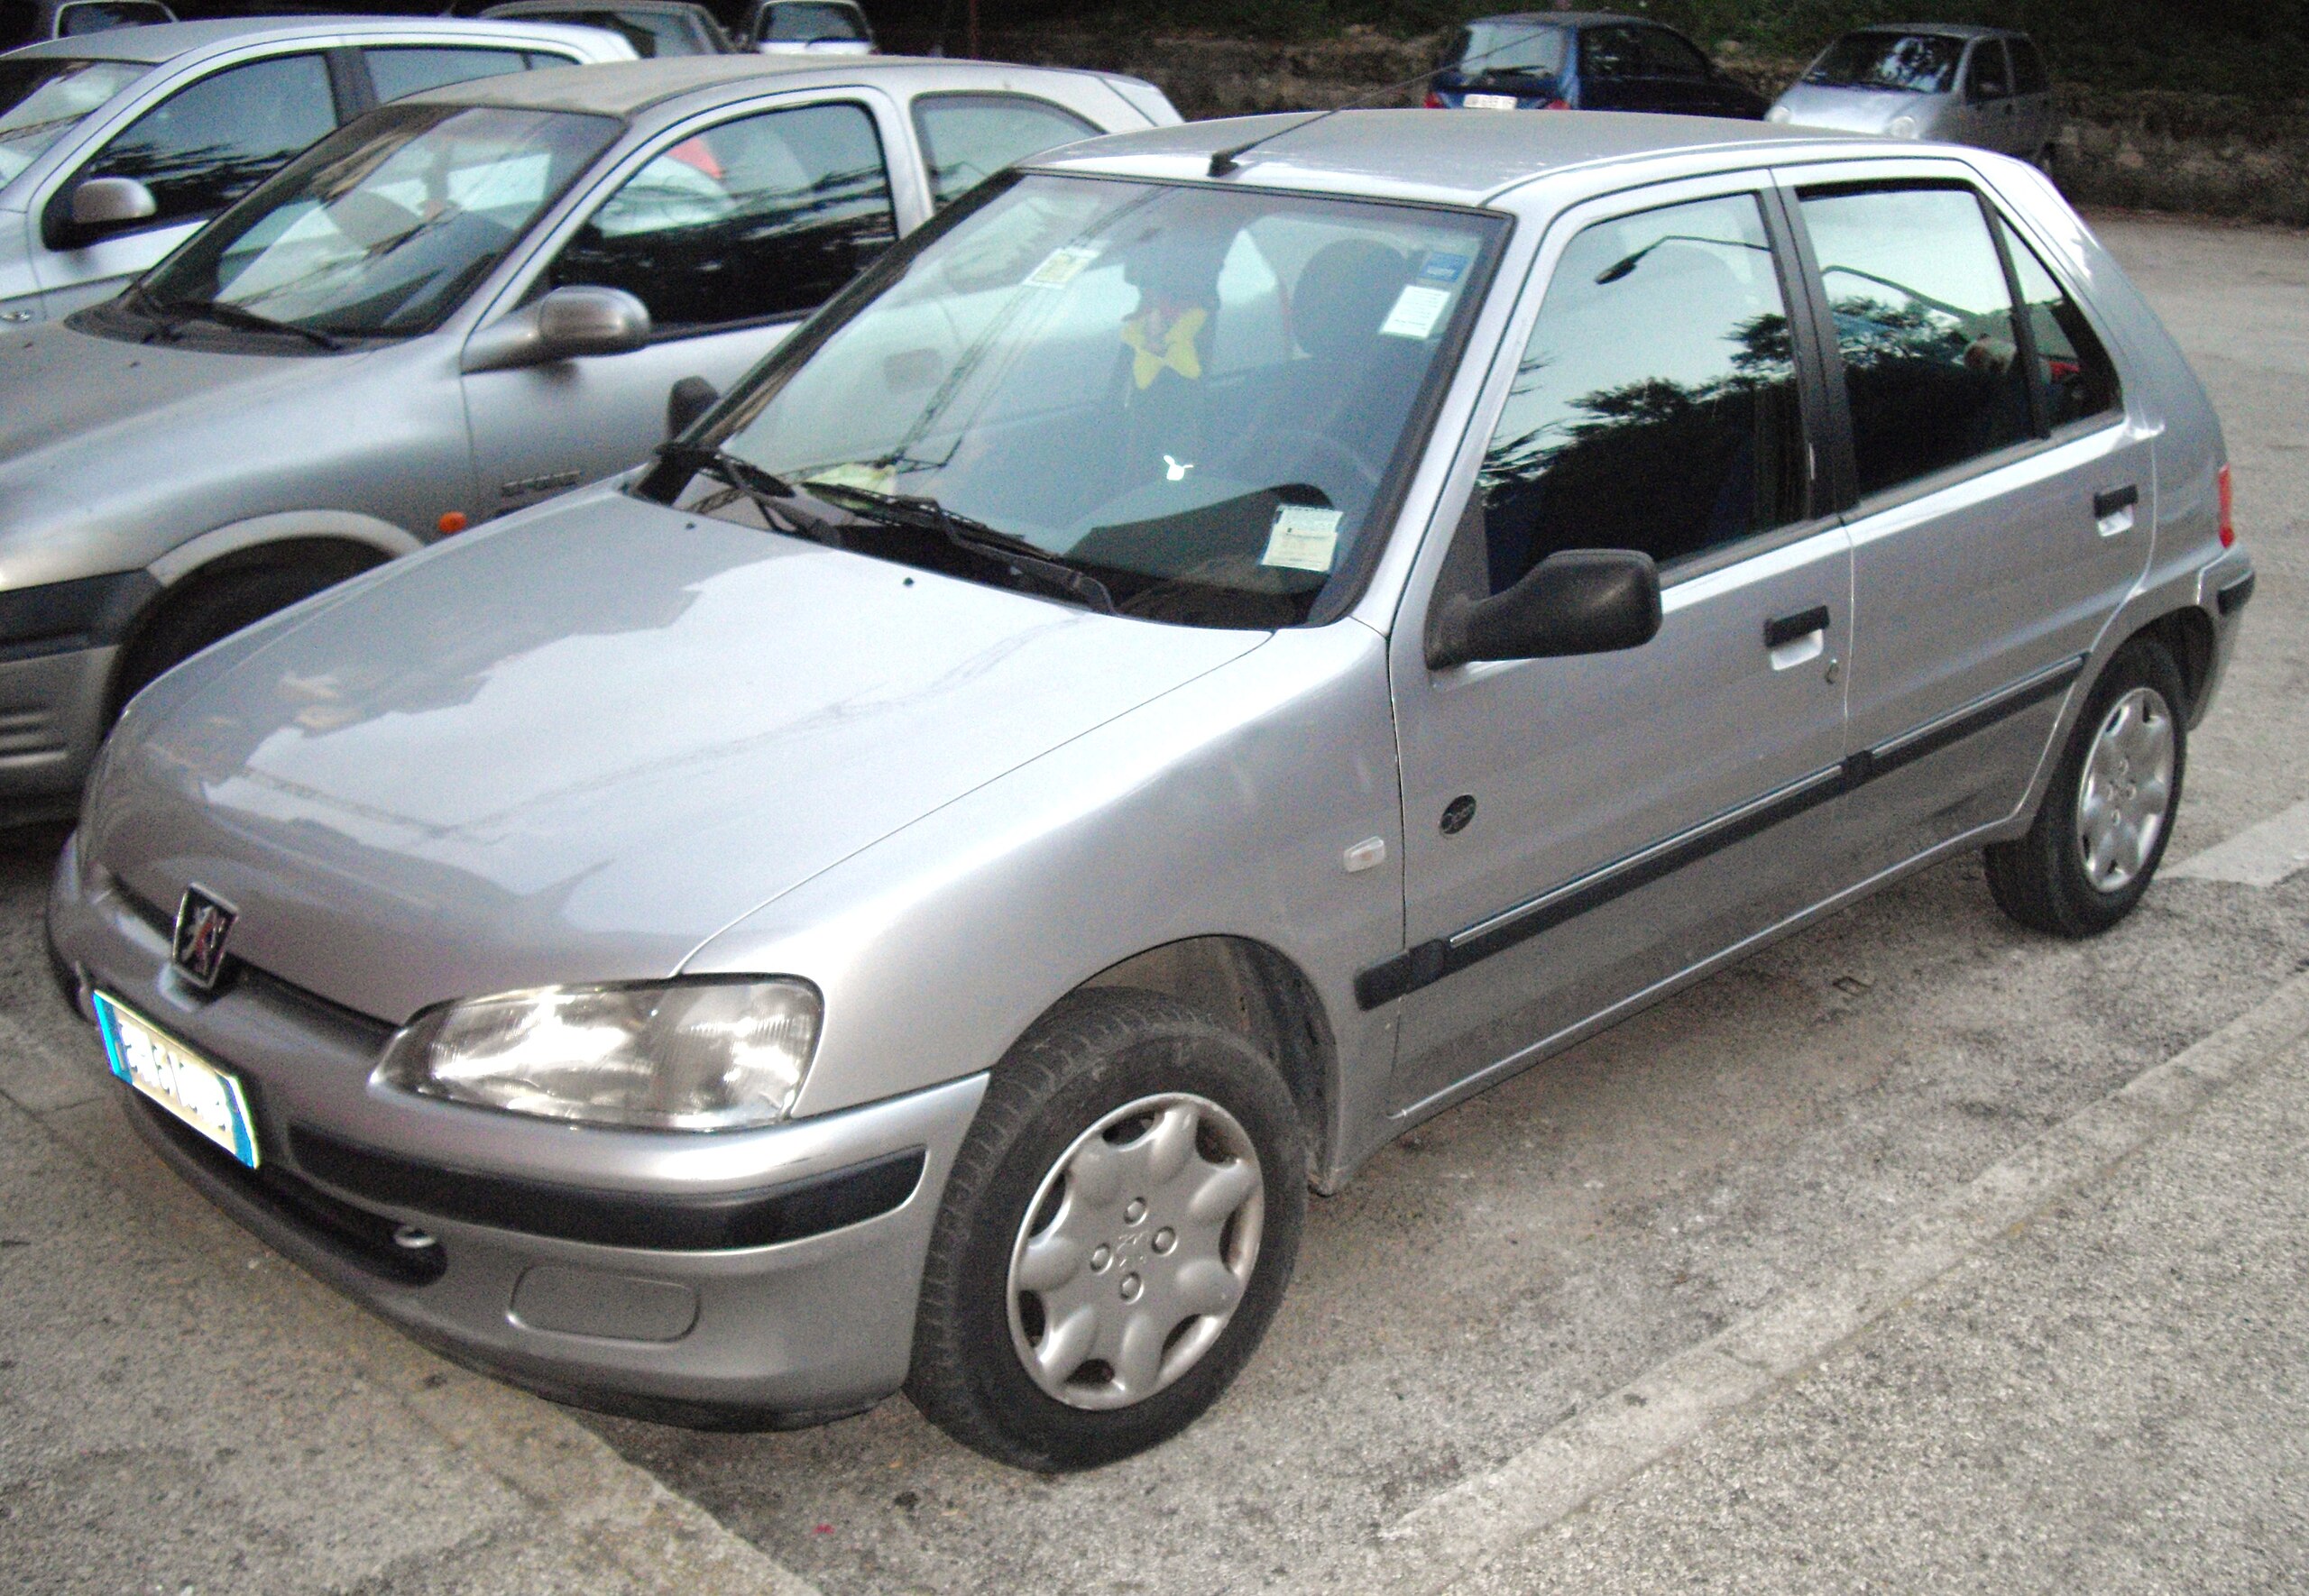 File:Peugeot 106 front 20071031.jpg - Wikimedia Commons